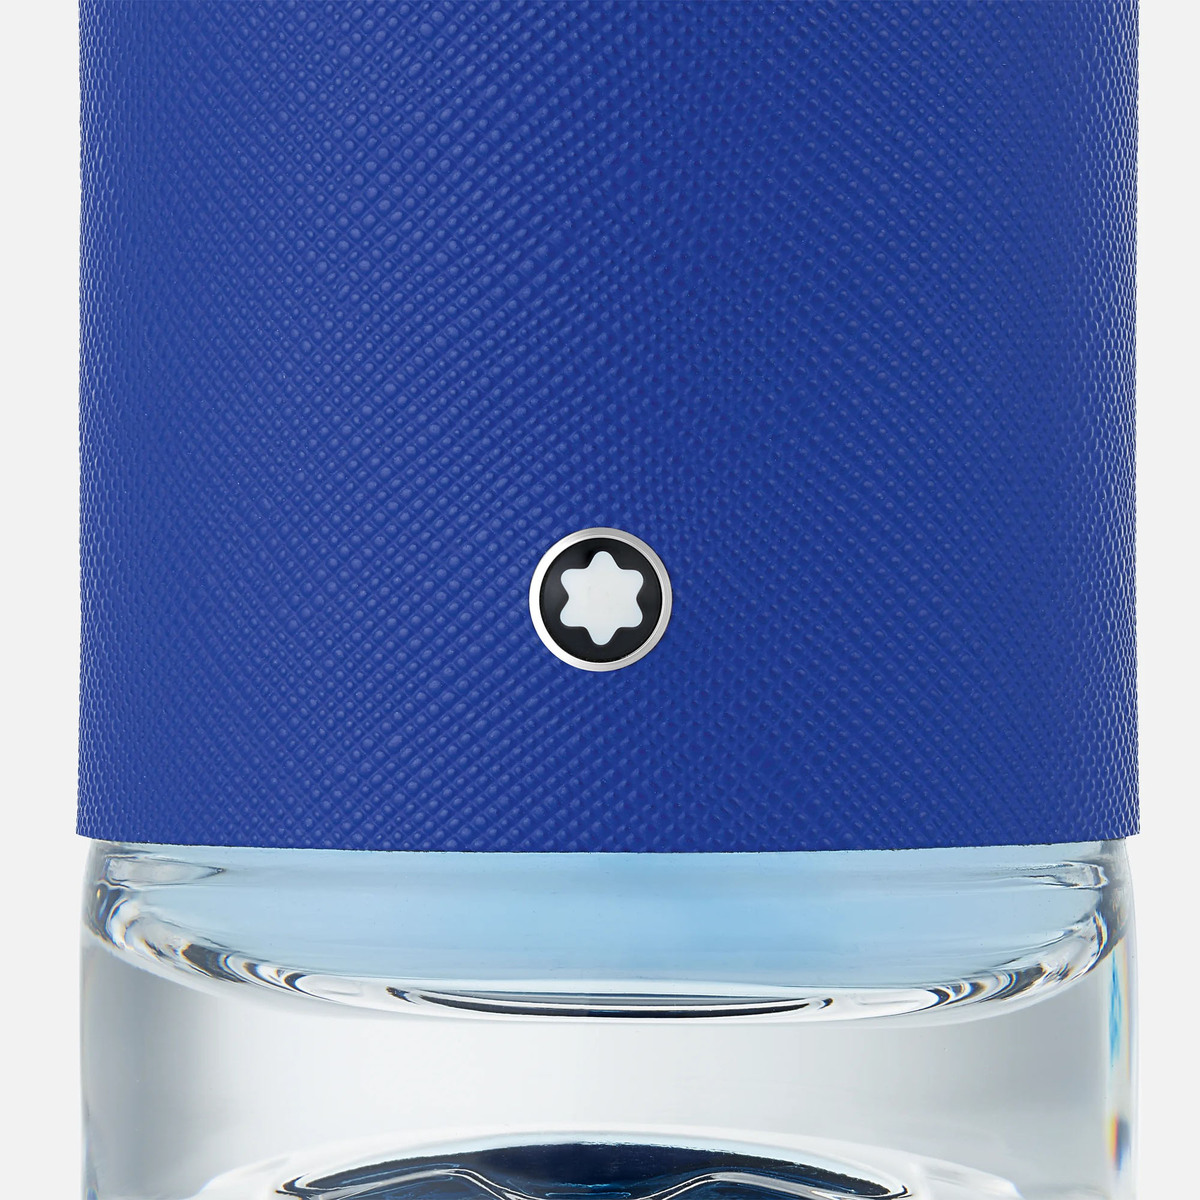 Mont Blanc Explorer Ultra Blue Eau De Parfume For Men, 100 ml + 7.5 ml Spray + 100 ml Shower Gel